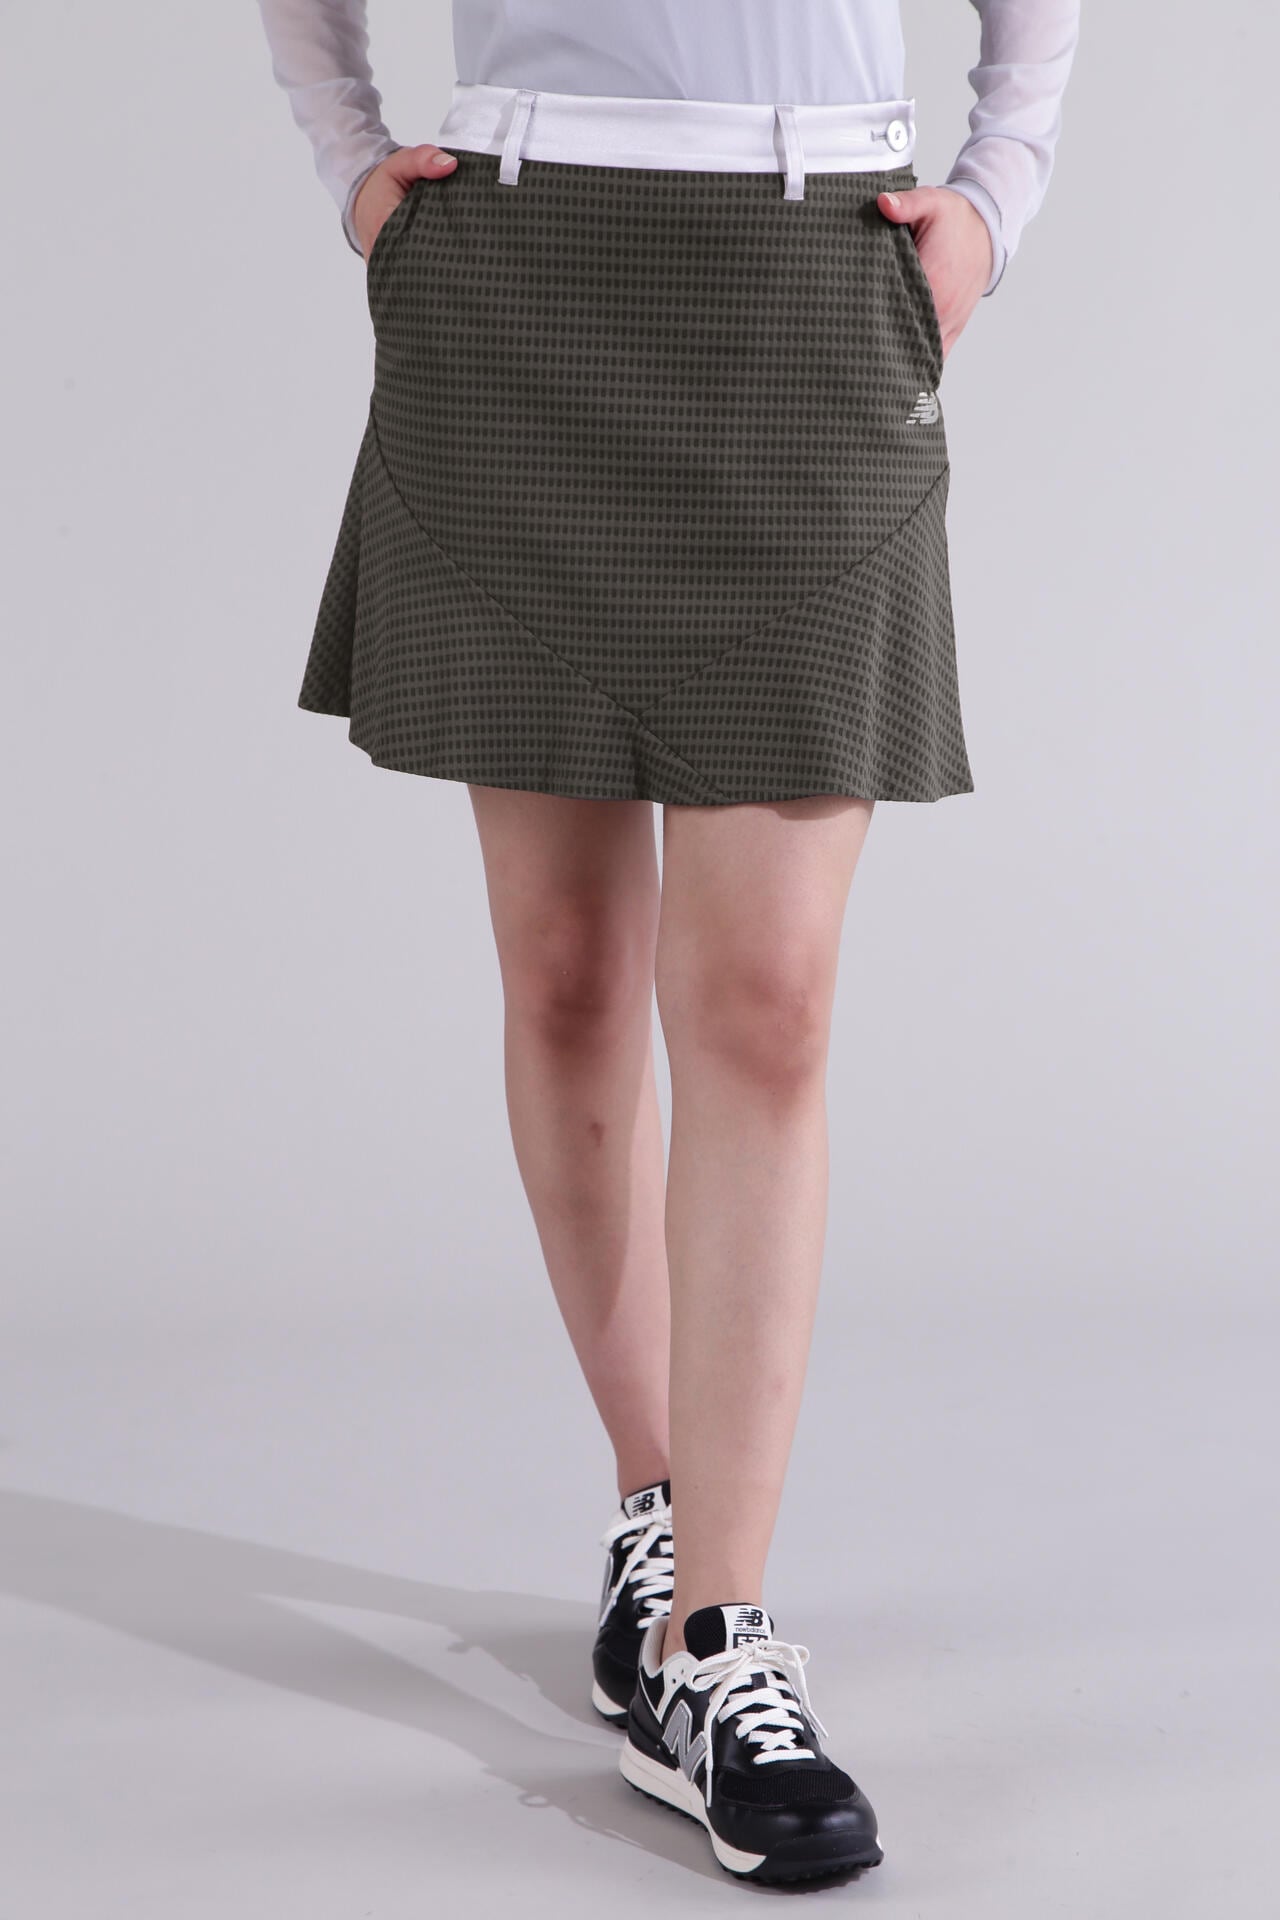 new balance golf】【直営店舗限定】インナー付きスカート (WOMENS)